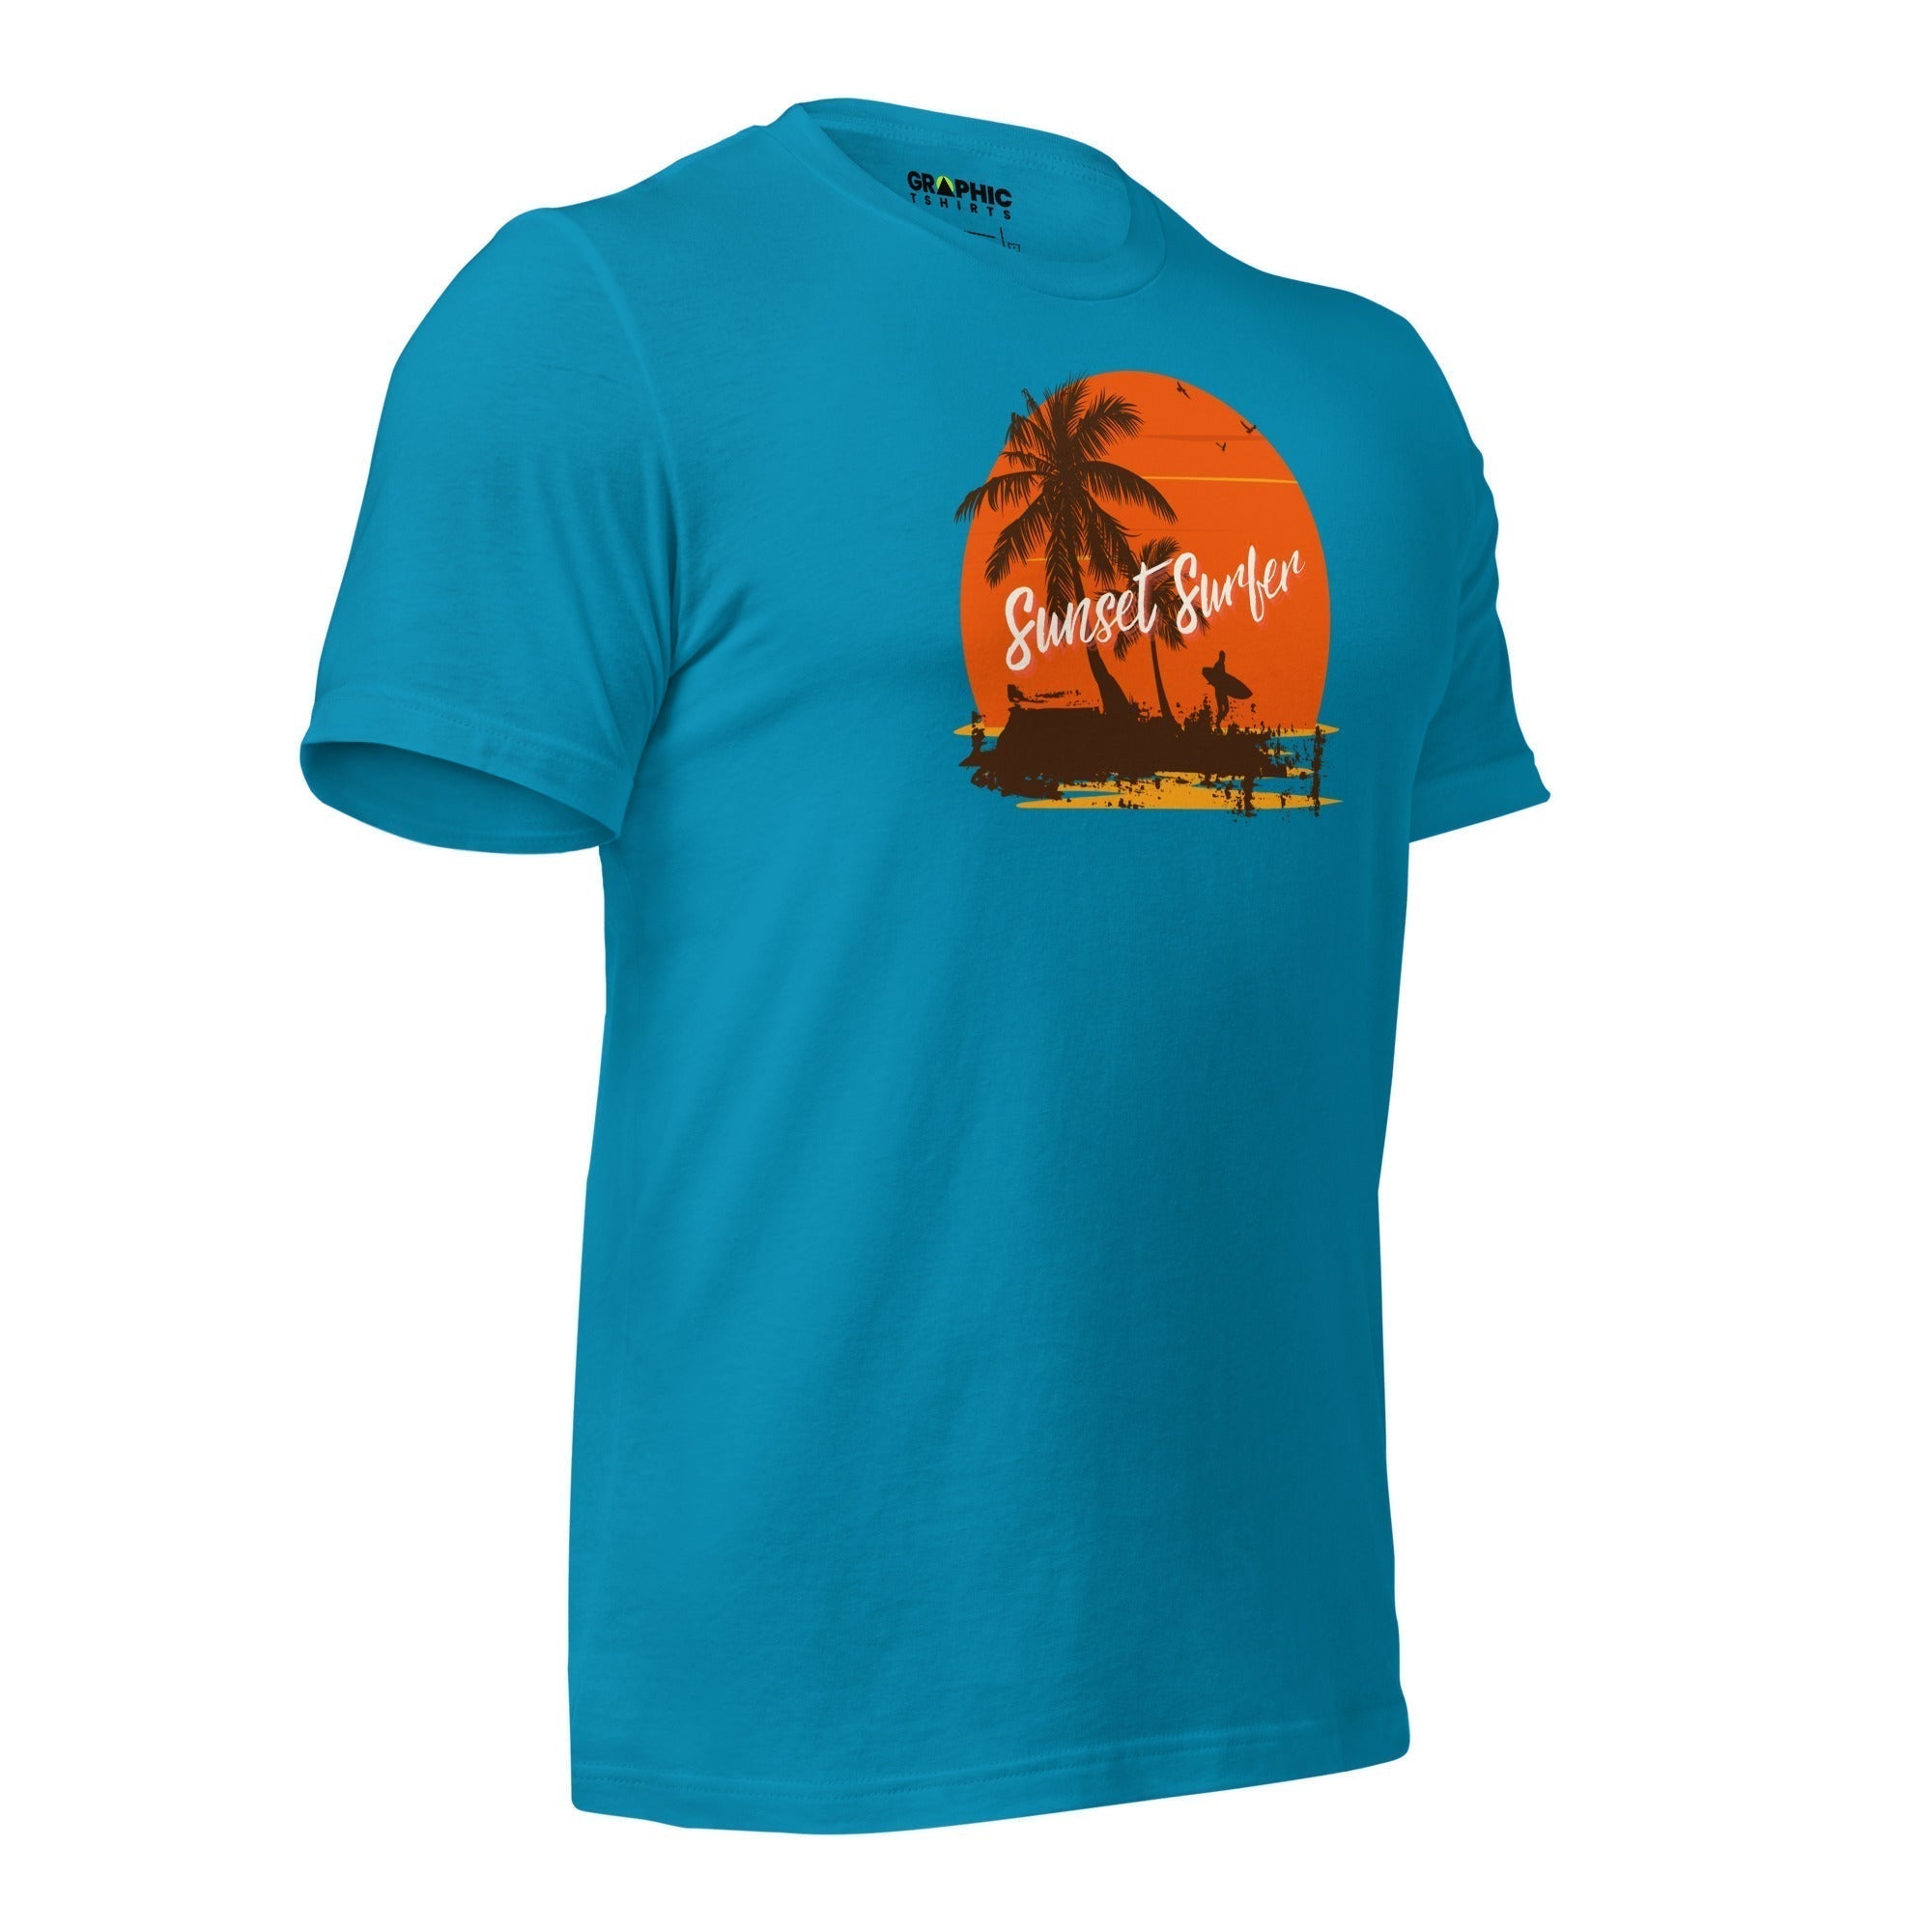 Unisex Staple T-Shirt - Sunset Surfer - GRAPHIC T-SHIRTS